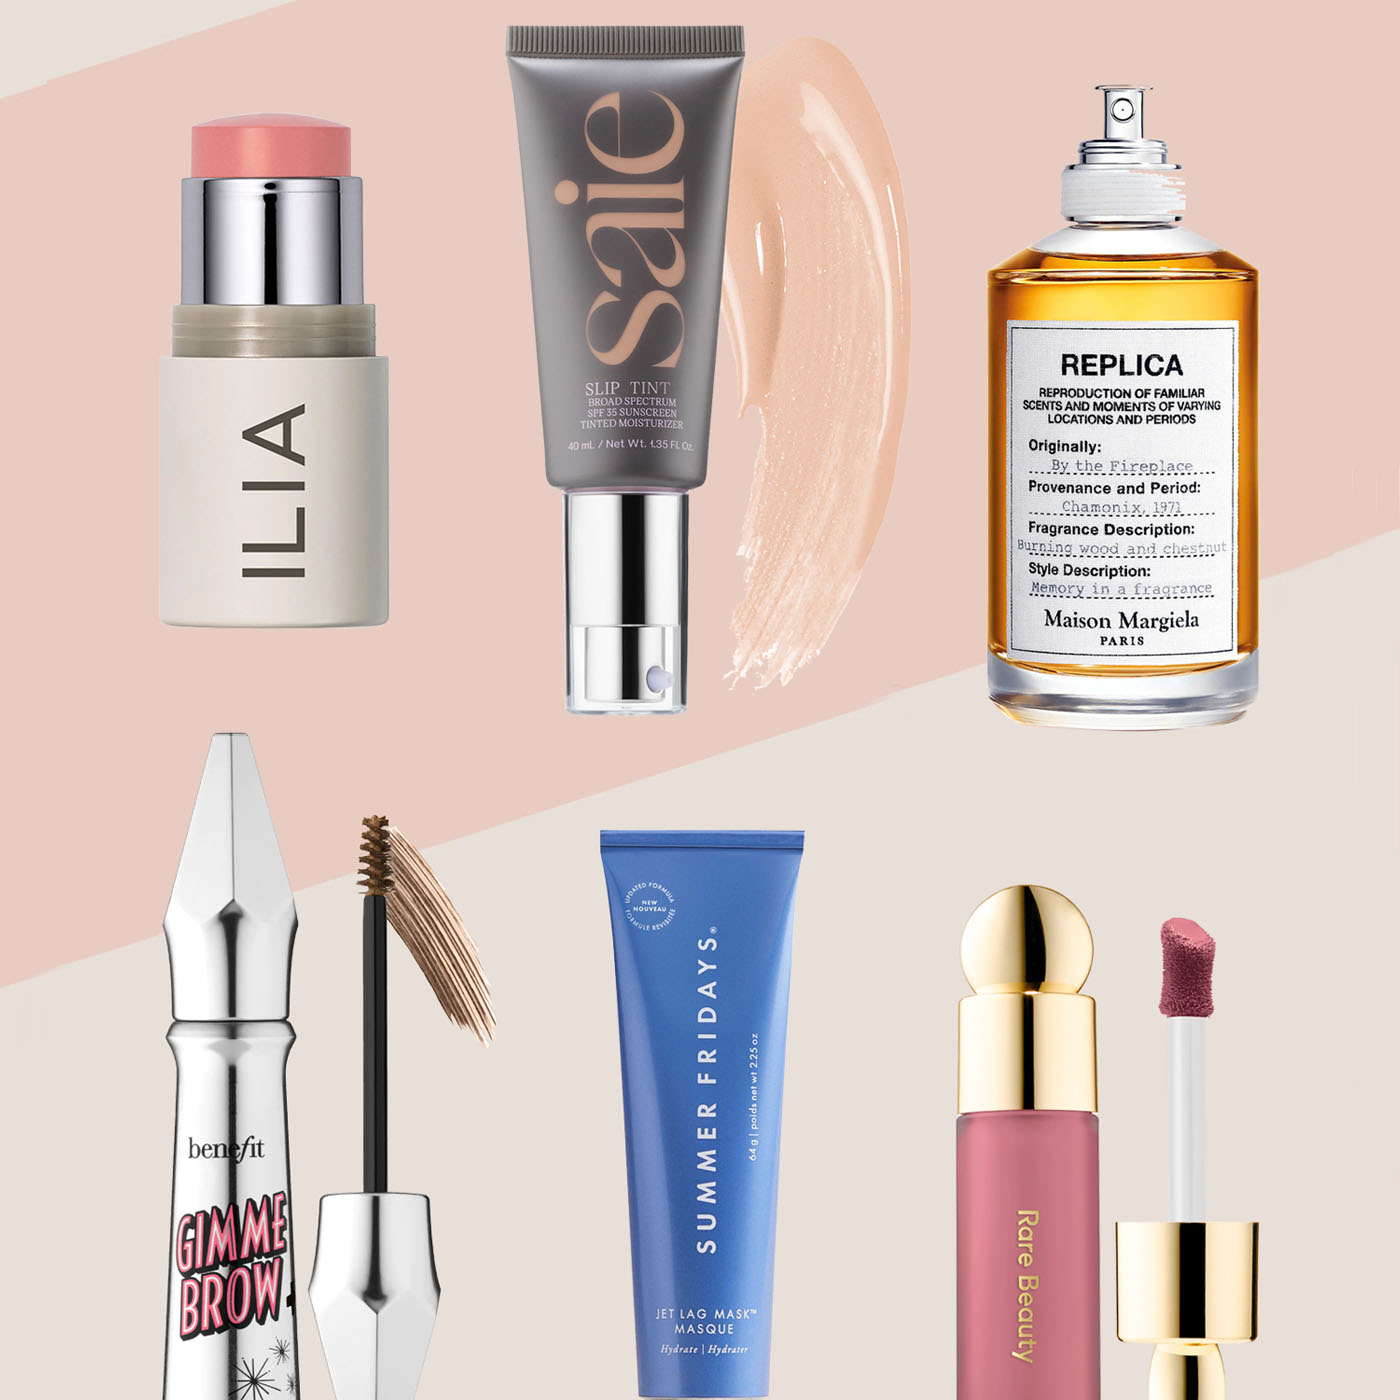 This Weeks Best Makeup Deals Roundup!  Best makeup products, Makeup deals,  Makeup